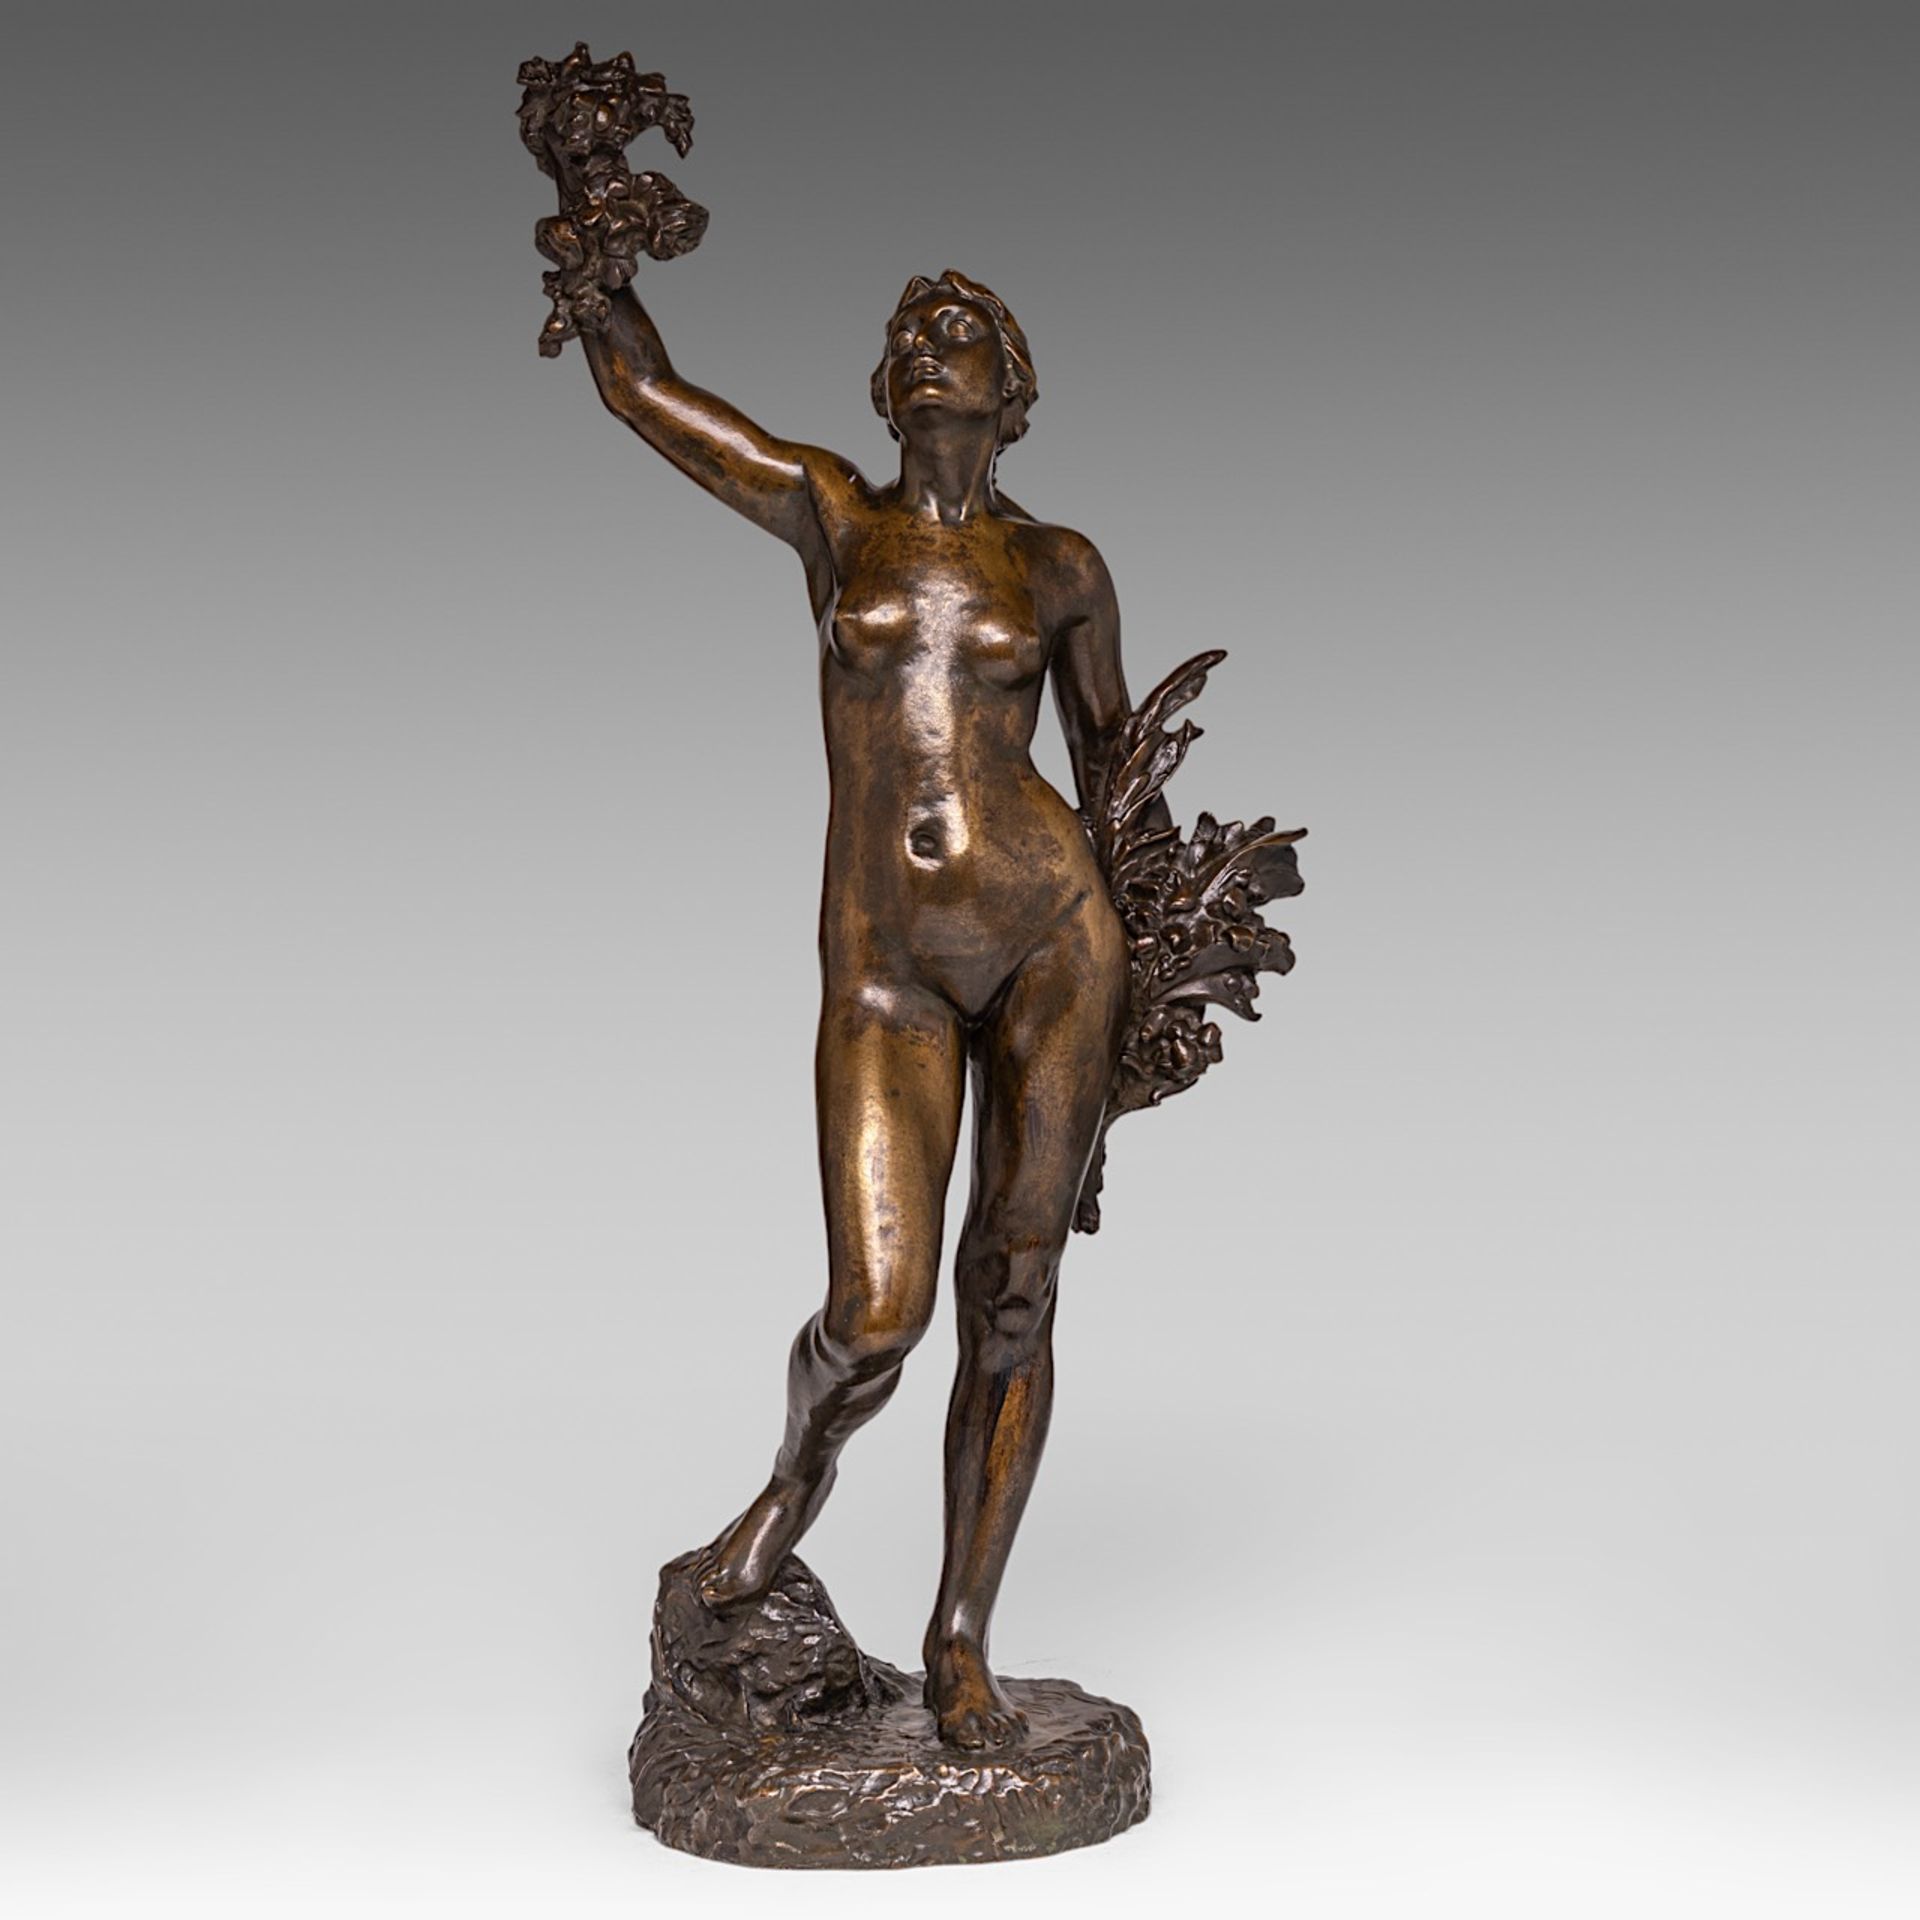 Desire Weygers (1868-1940), female nude, patinated bronze, H 79 cm